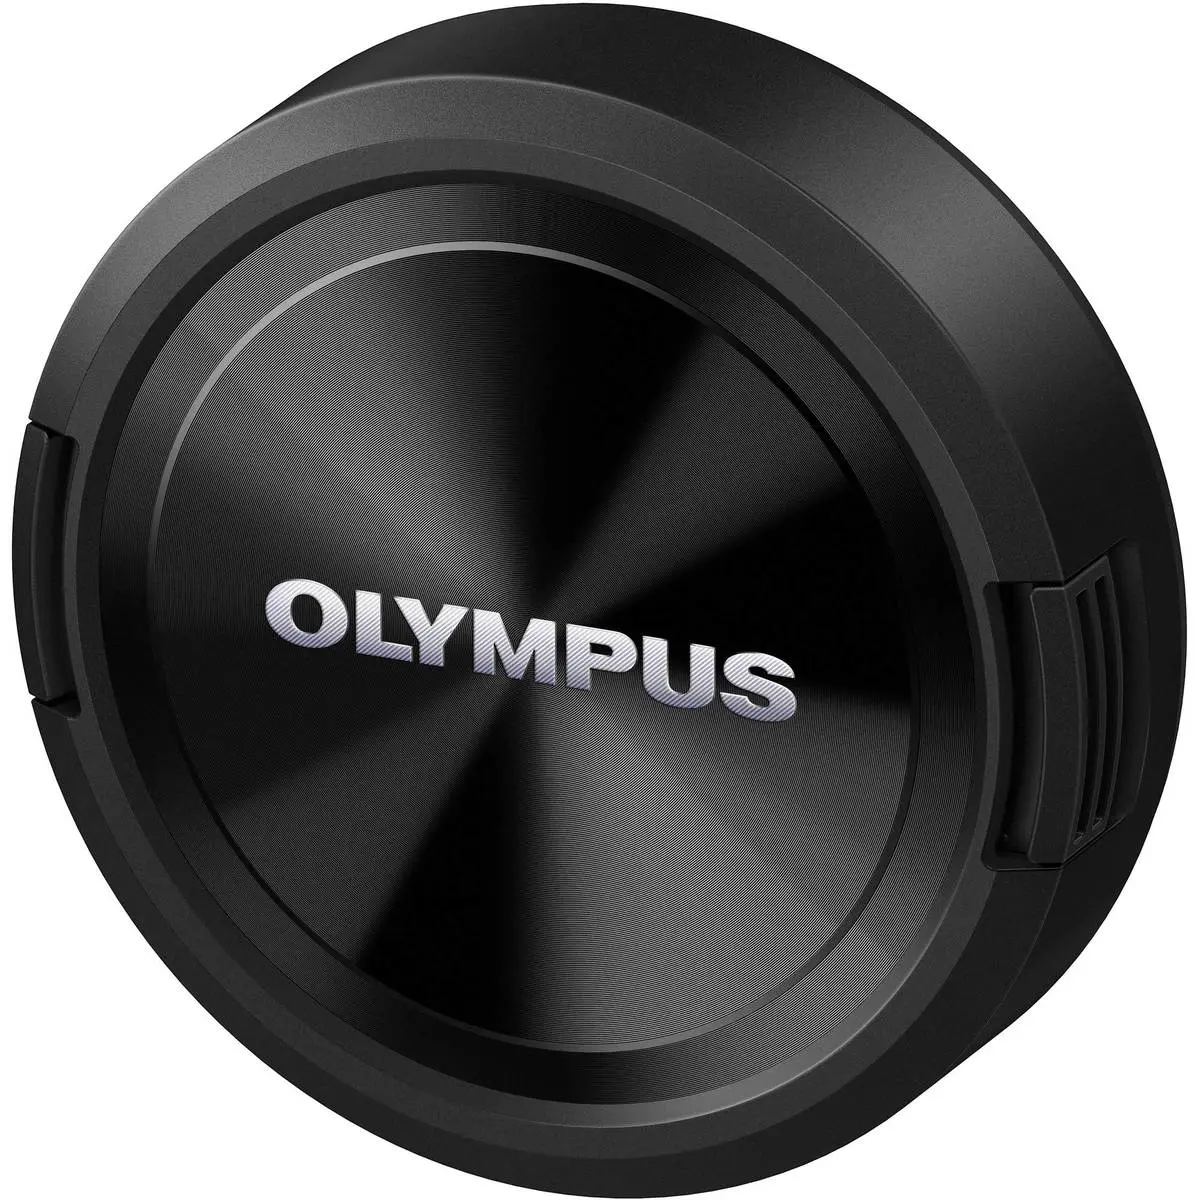 3. Olympus M.ZUIKO DIGITAL ED 7-14mm F2.8 PRO Lens